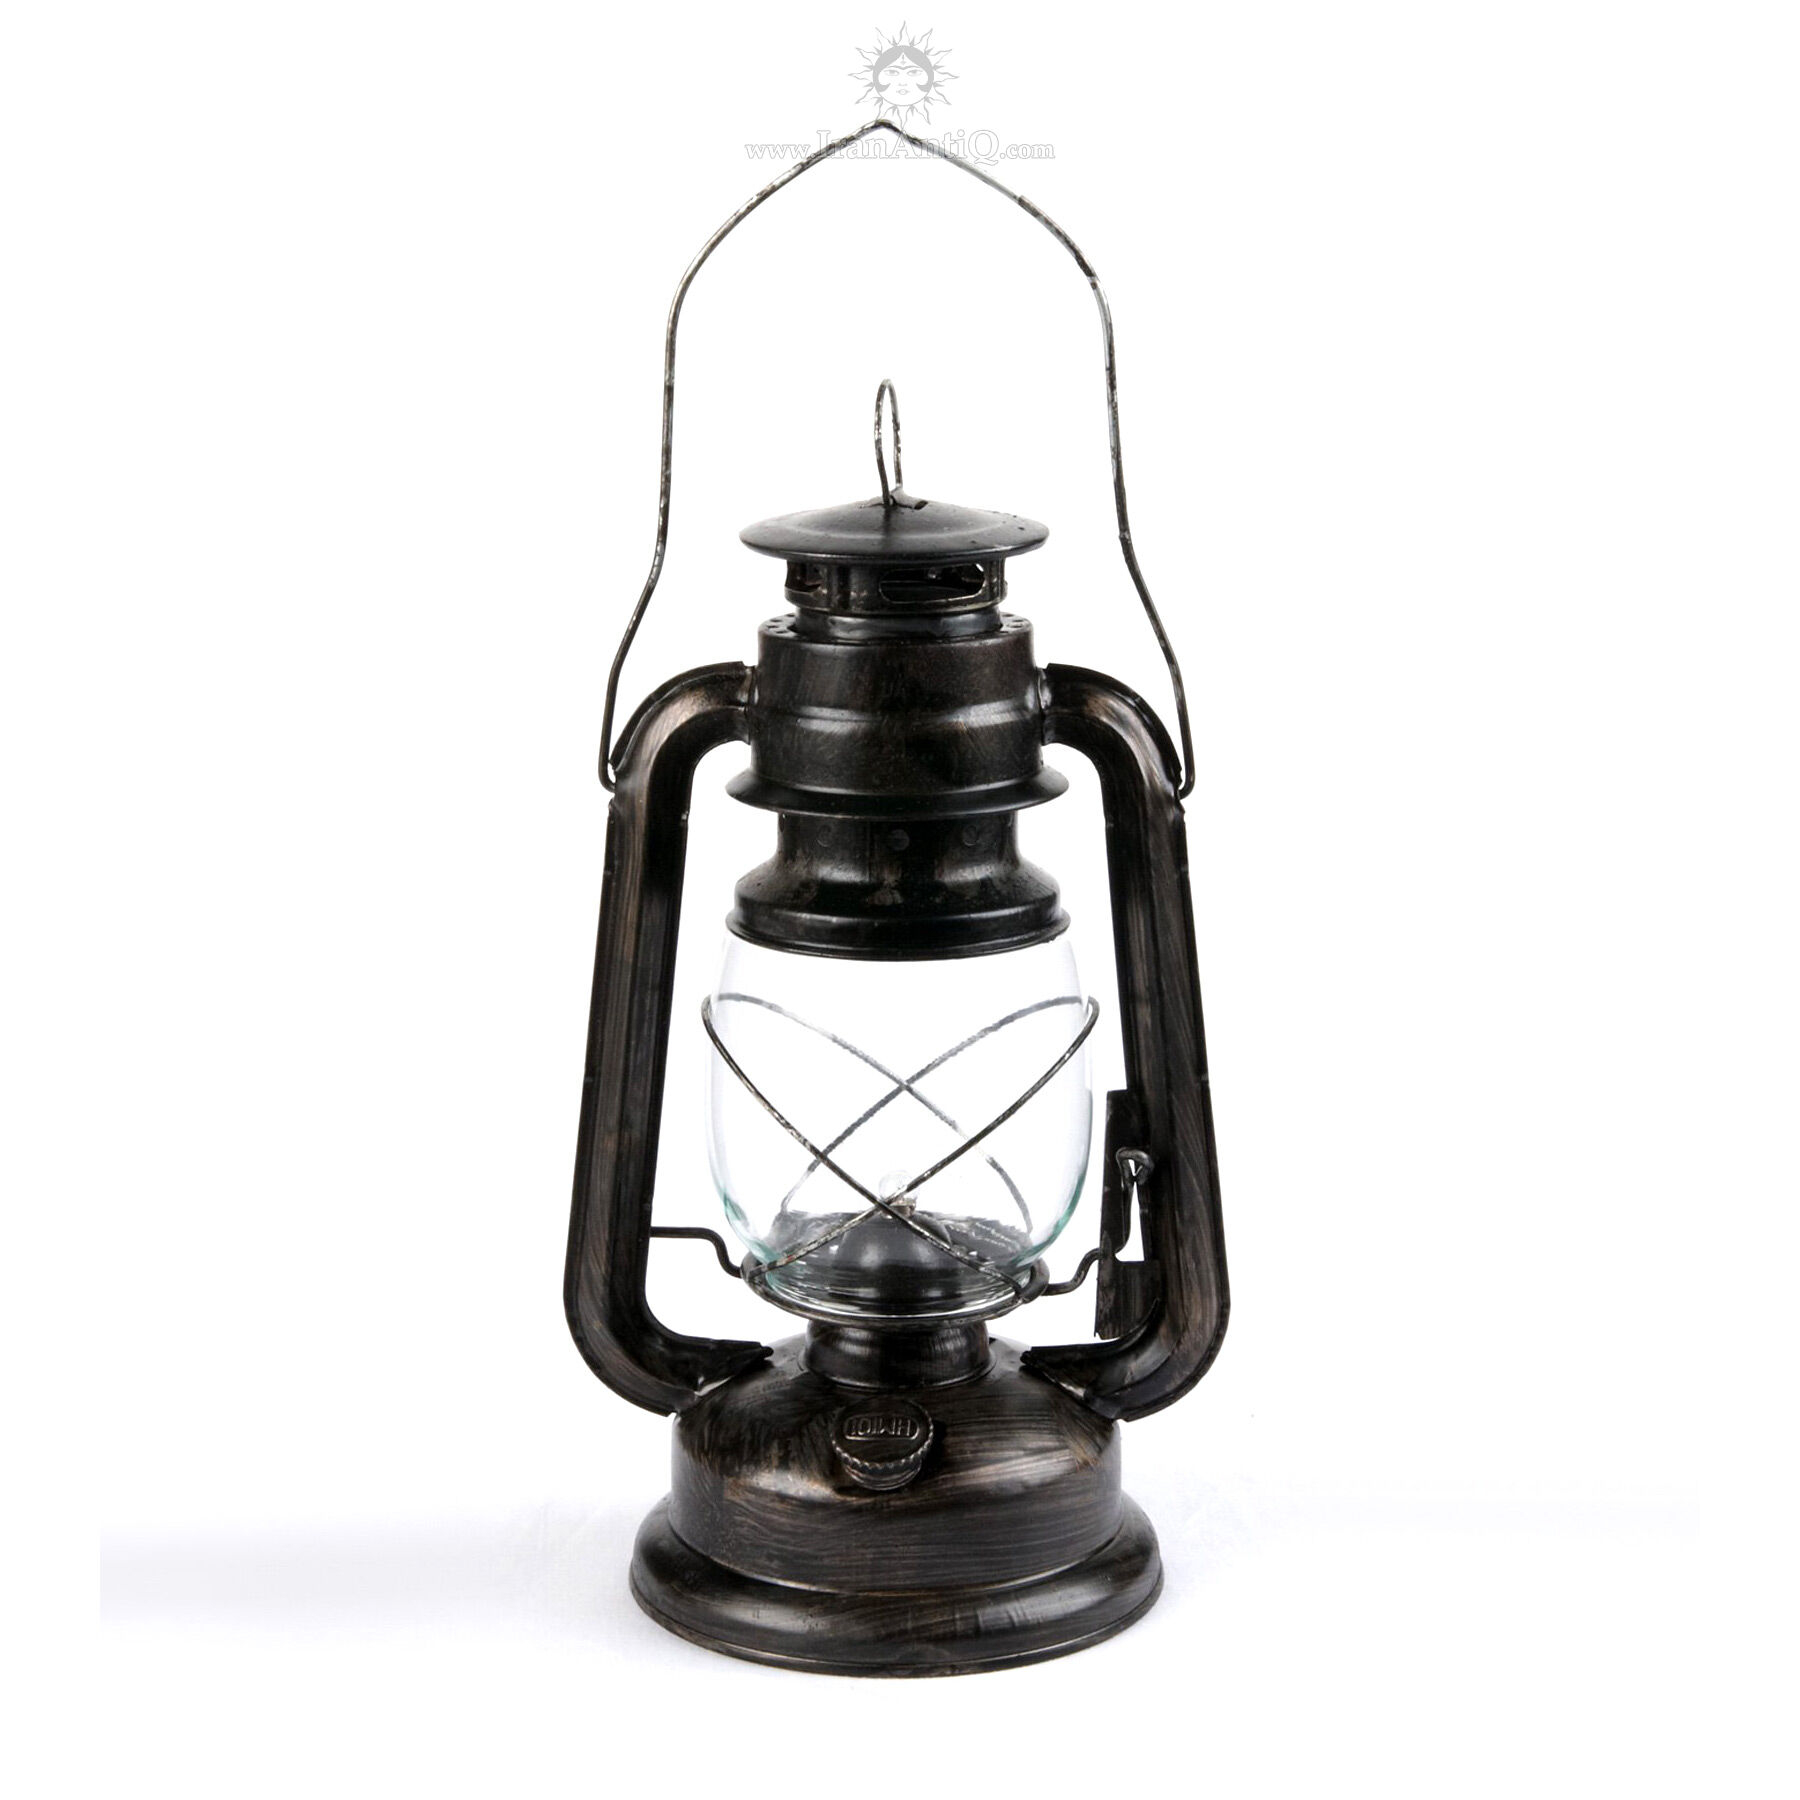 https://visualhunt.com/photos/10/old-lantern-battery-operated.jpg